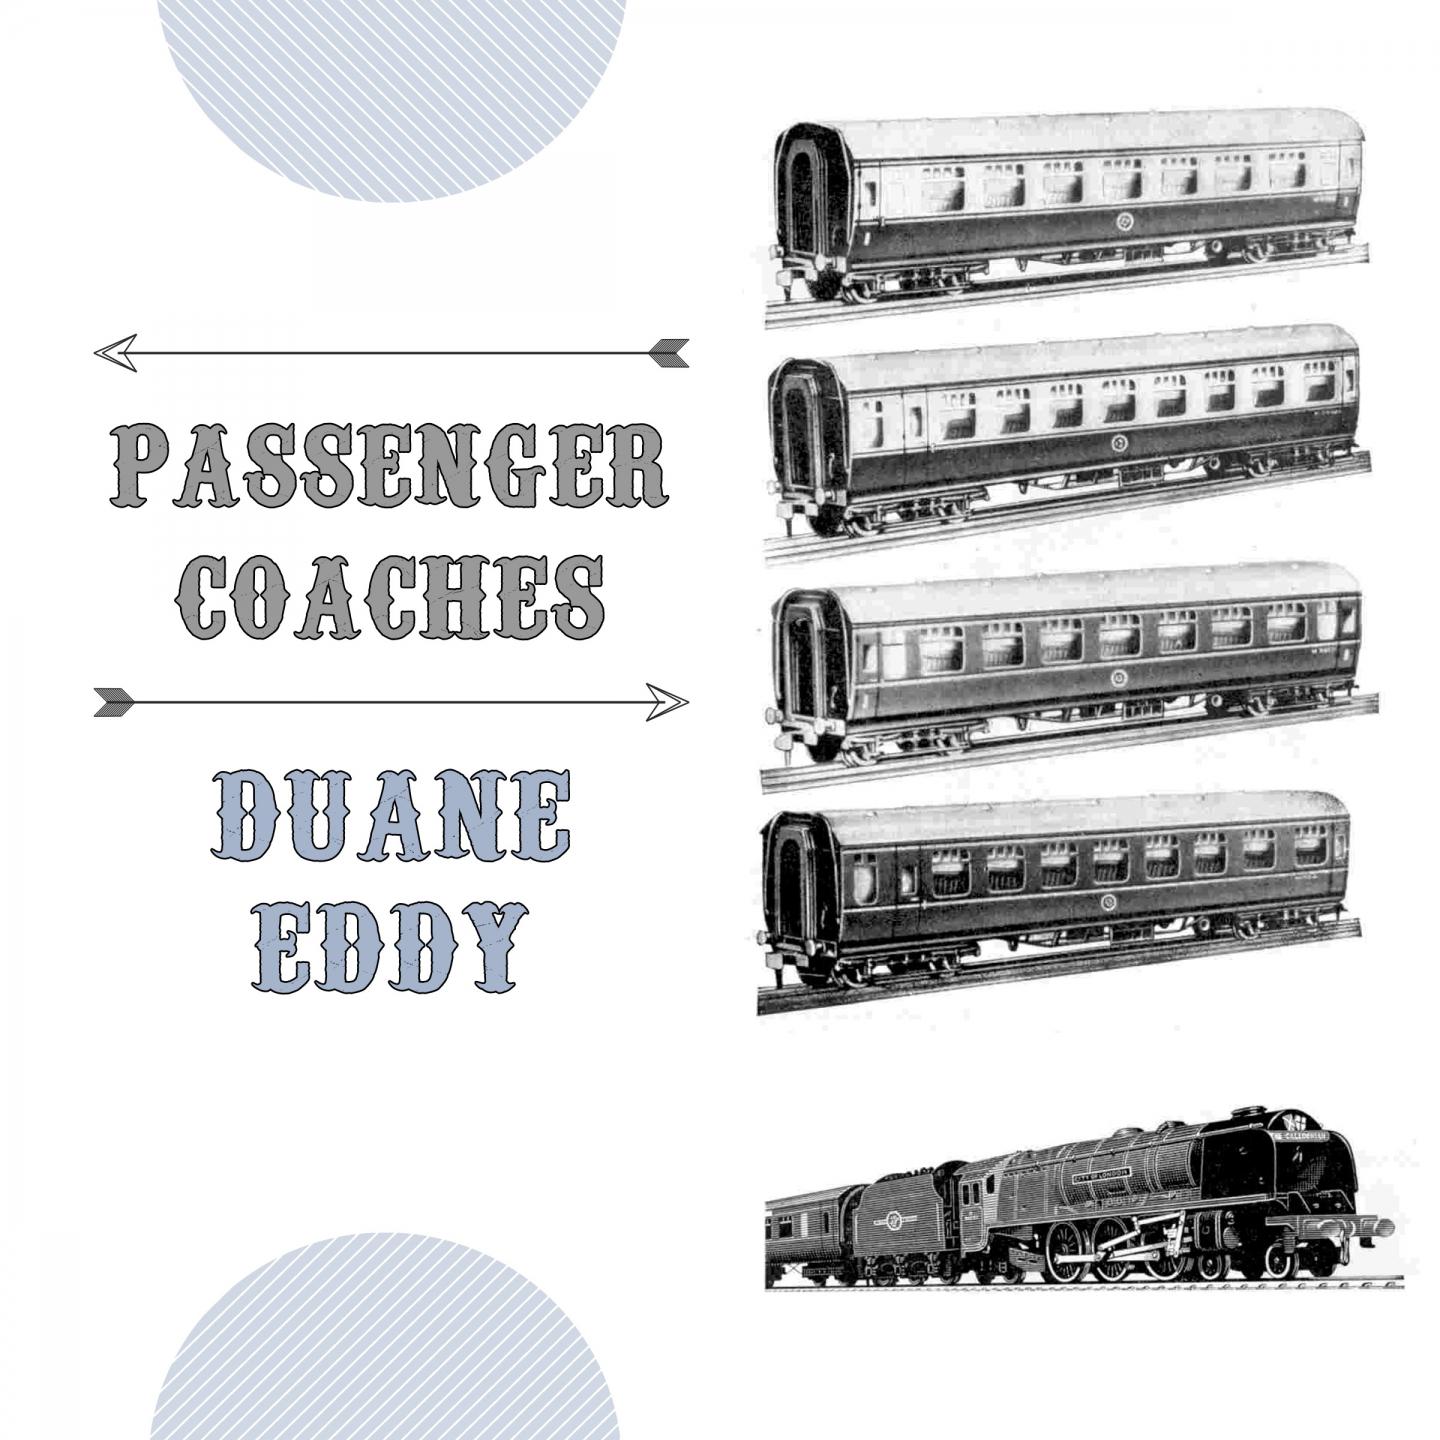 Passenger Coaches